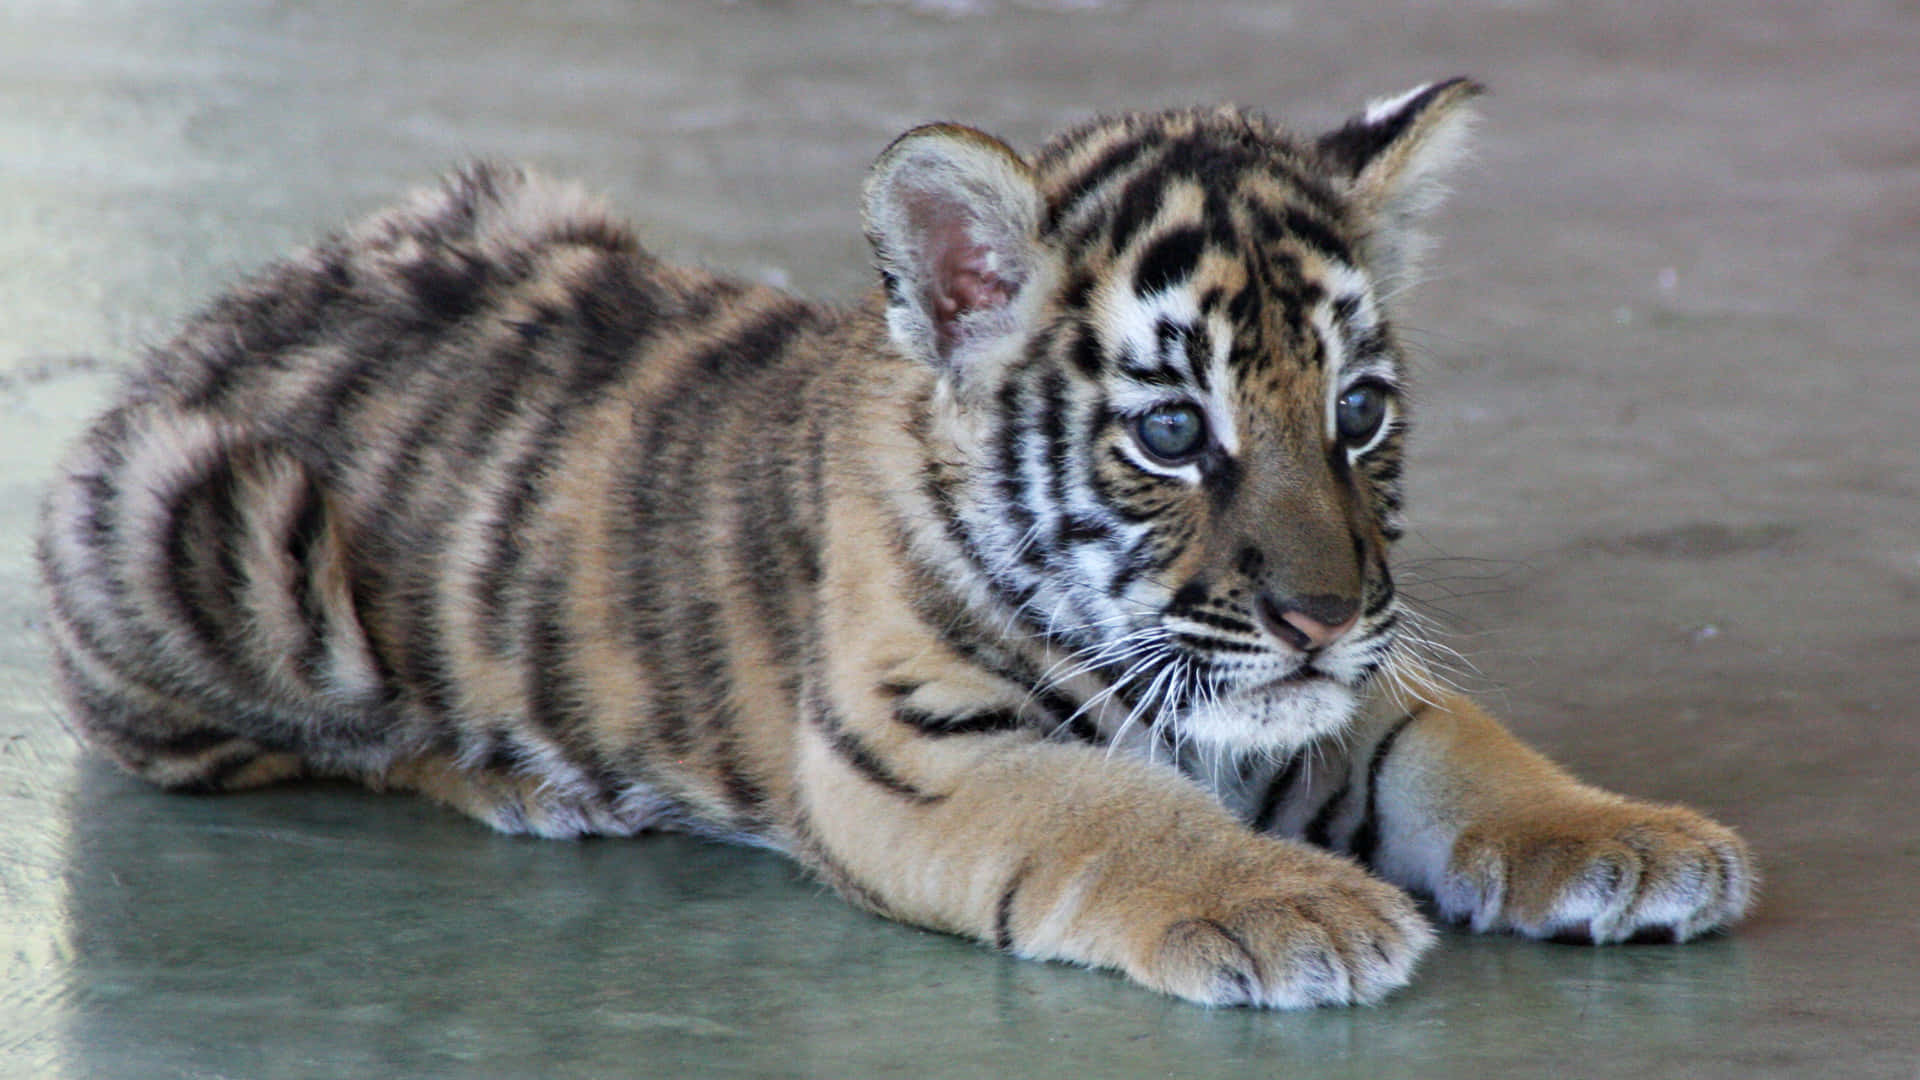 Cute Adorable Fat Tiger Picture